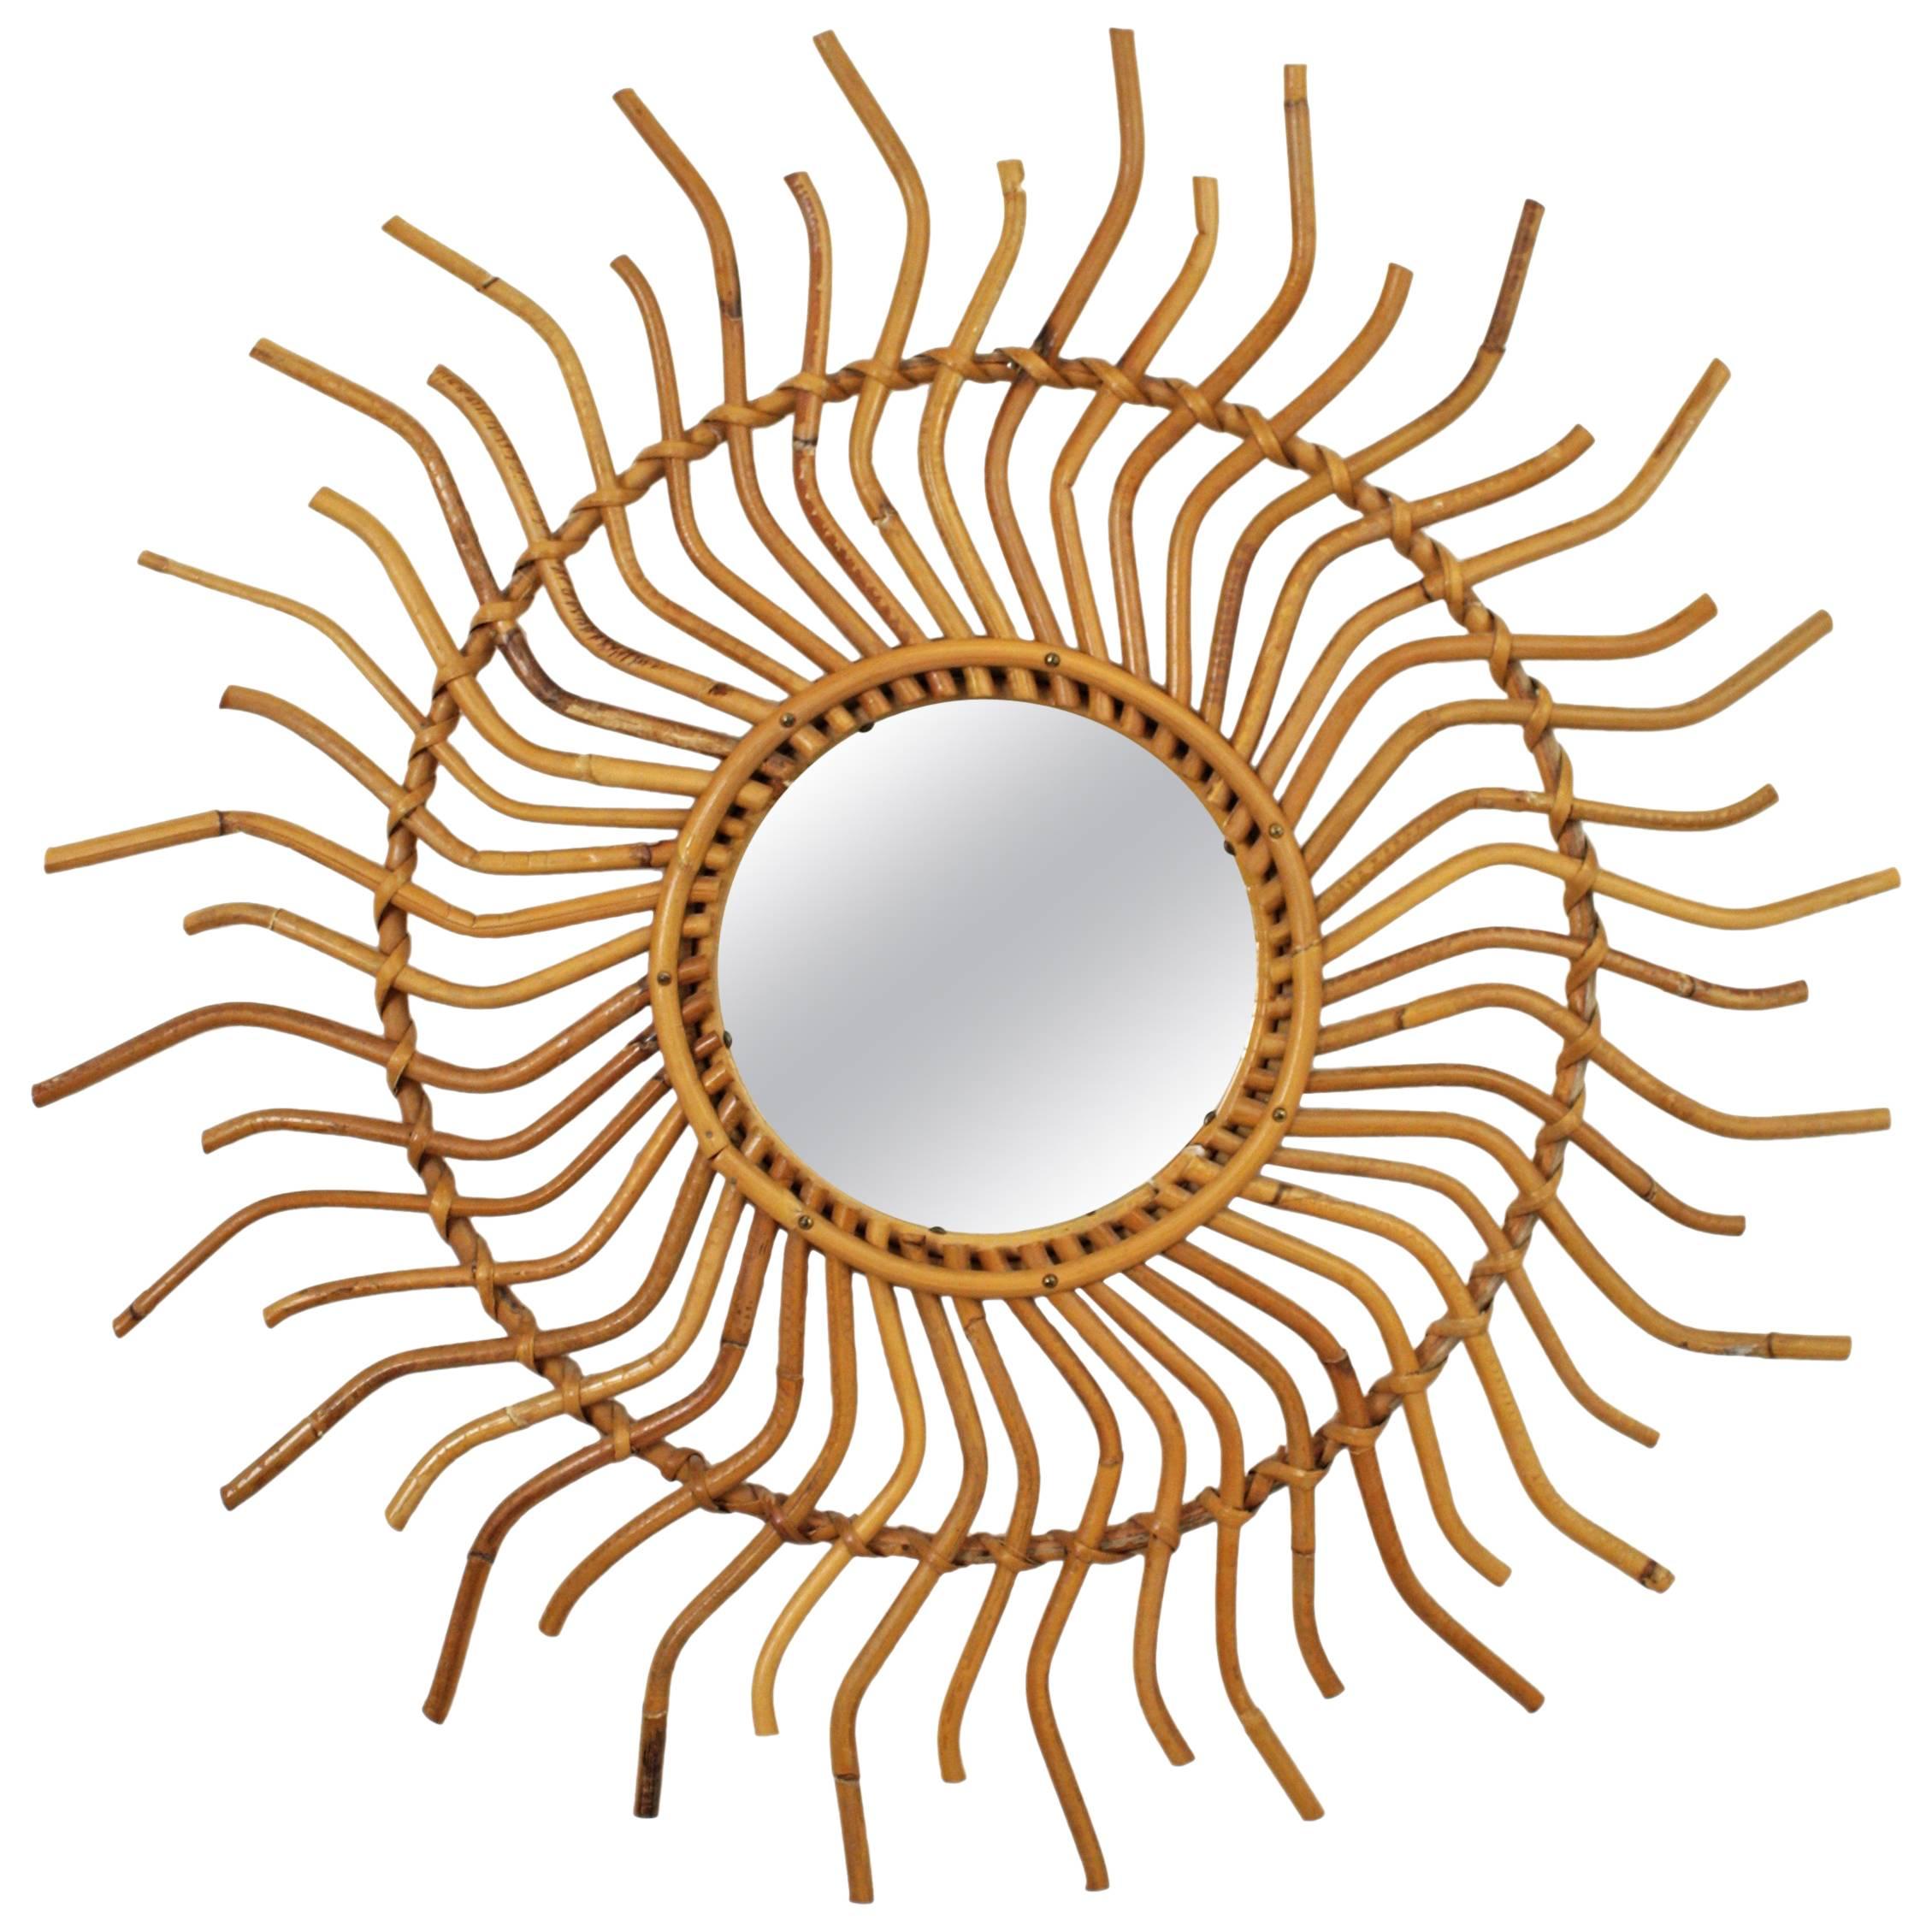 1960s Spanish Bamboo Rattan Sunburst Pinwheel Mirror with Curly Beams